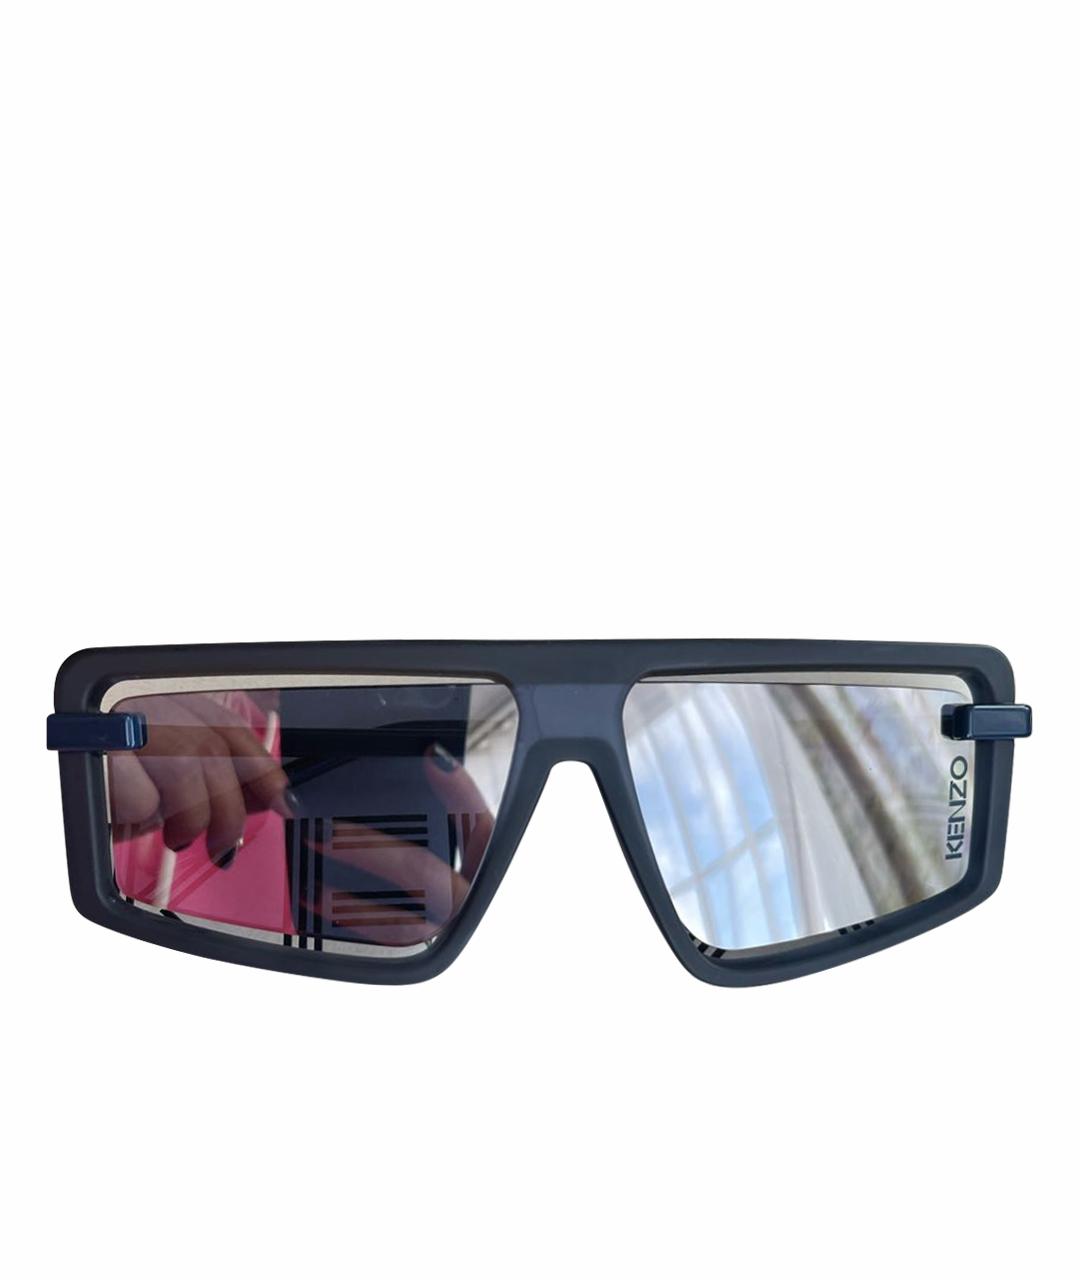 KENZO Темно-синие пластиковые солнцезащитные очки, фото 1